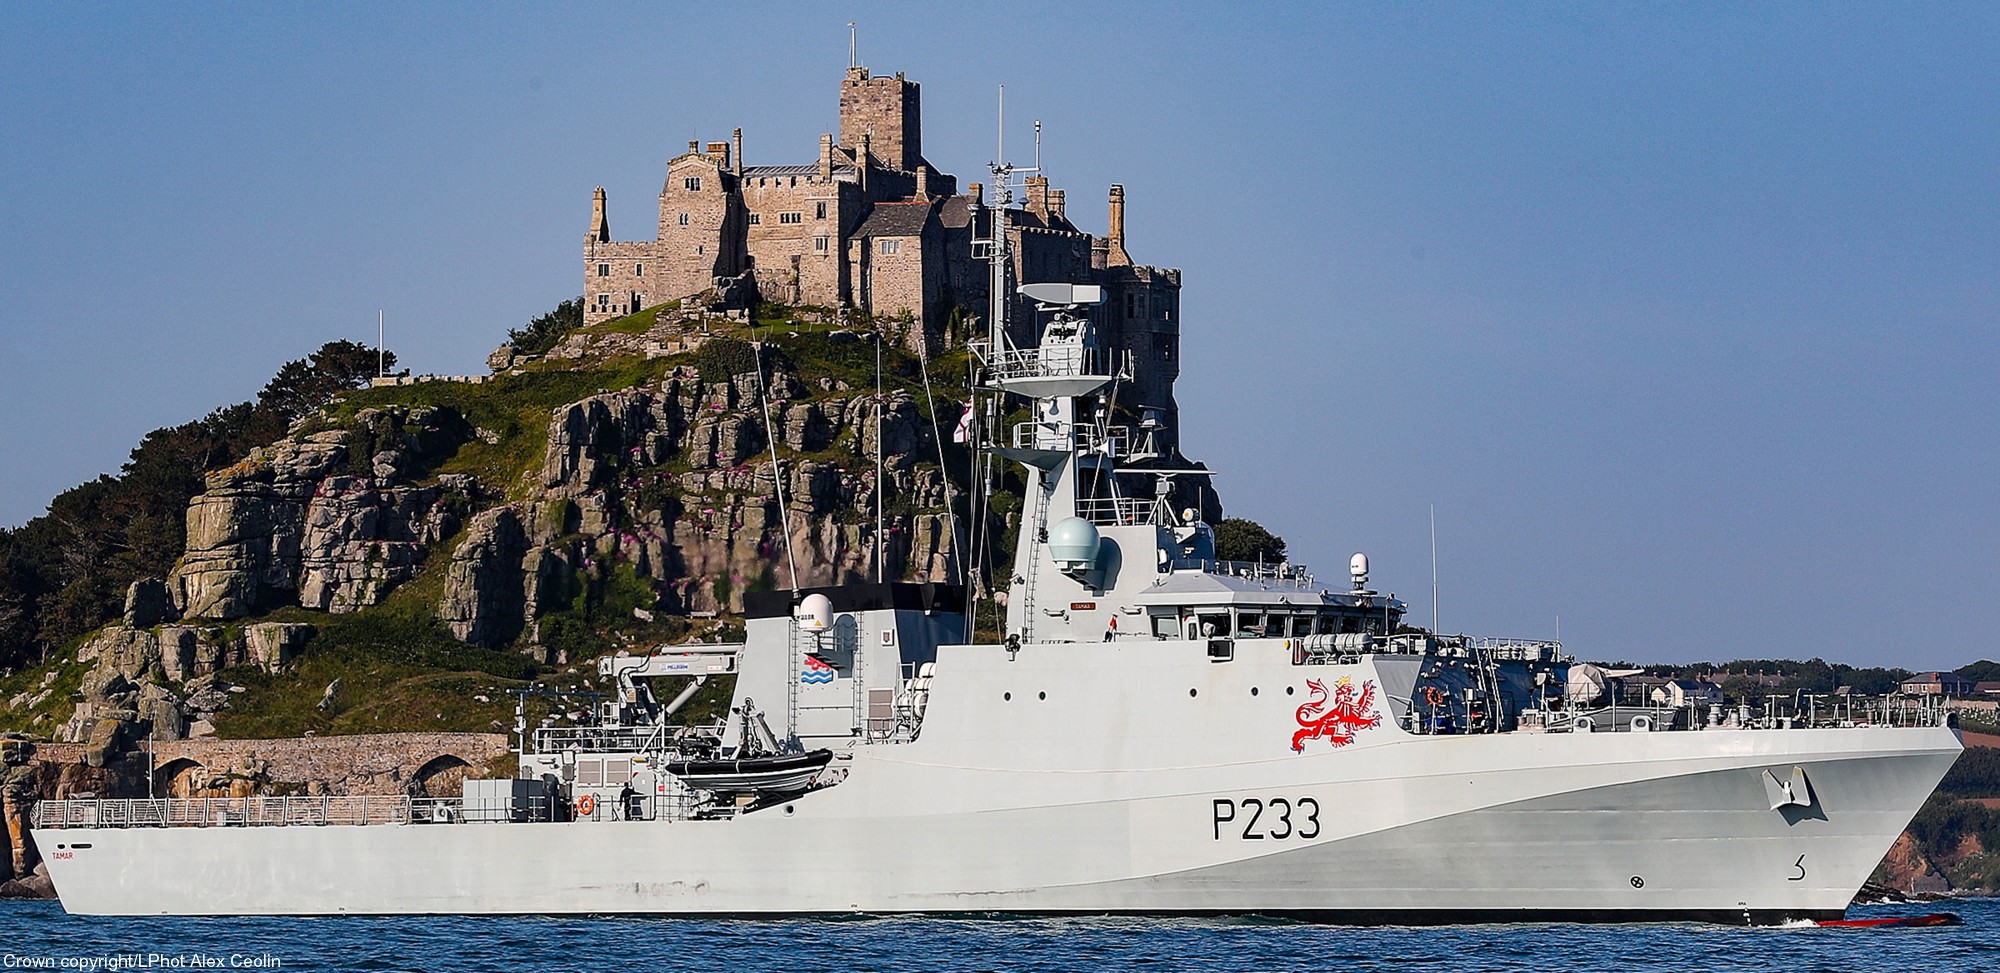 p233 hms tamar river class offshore patrol vessel opv royal navy 28